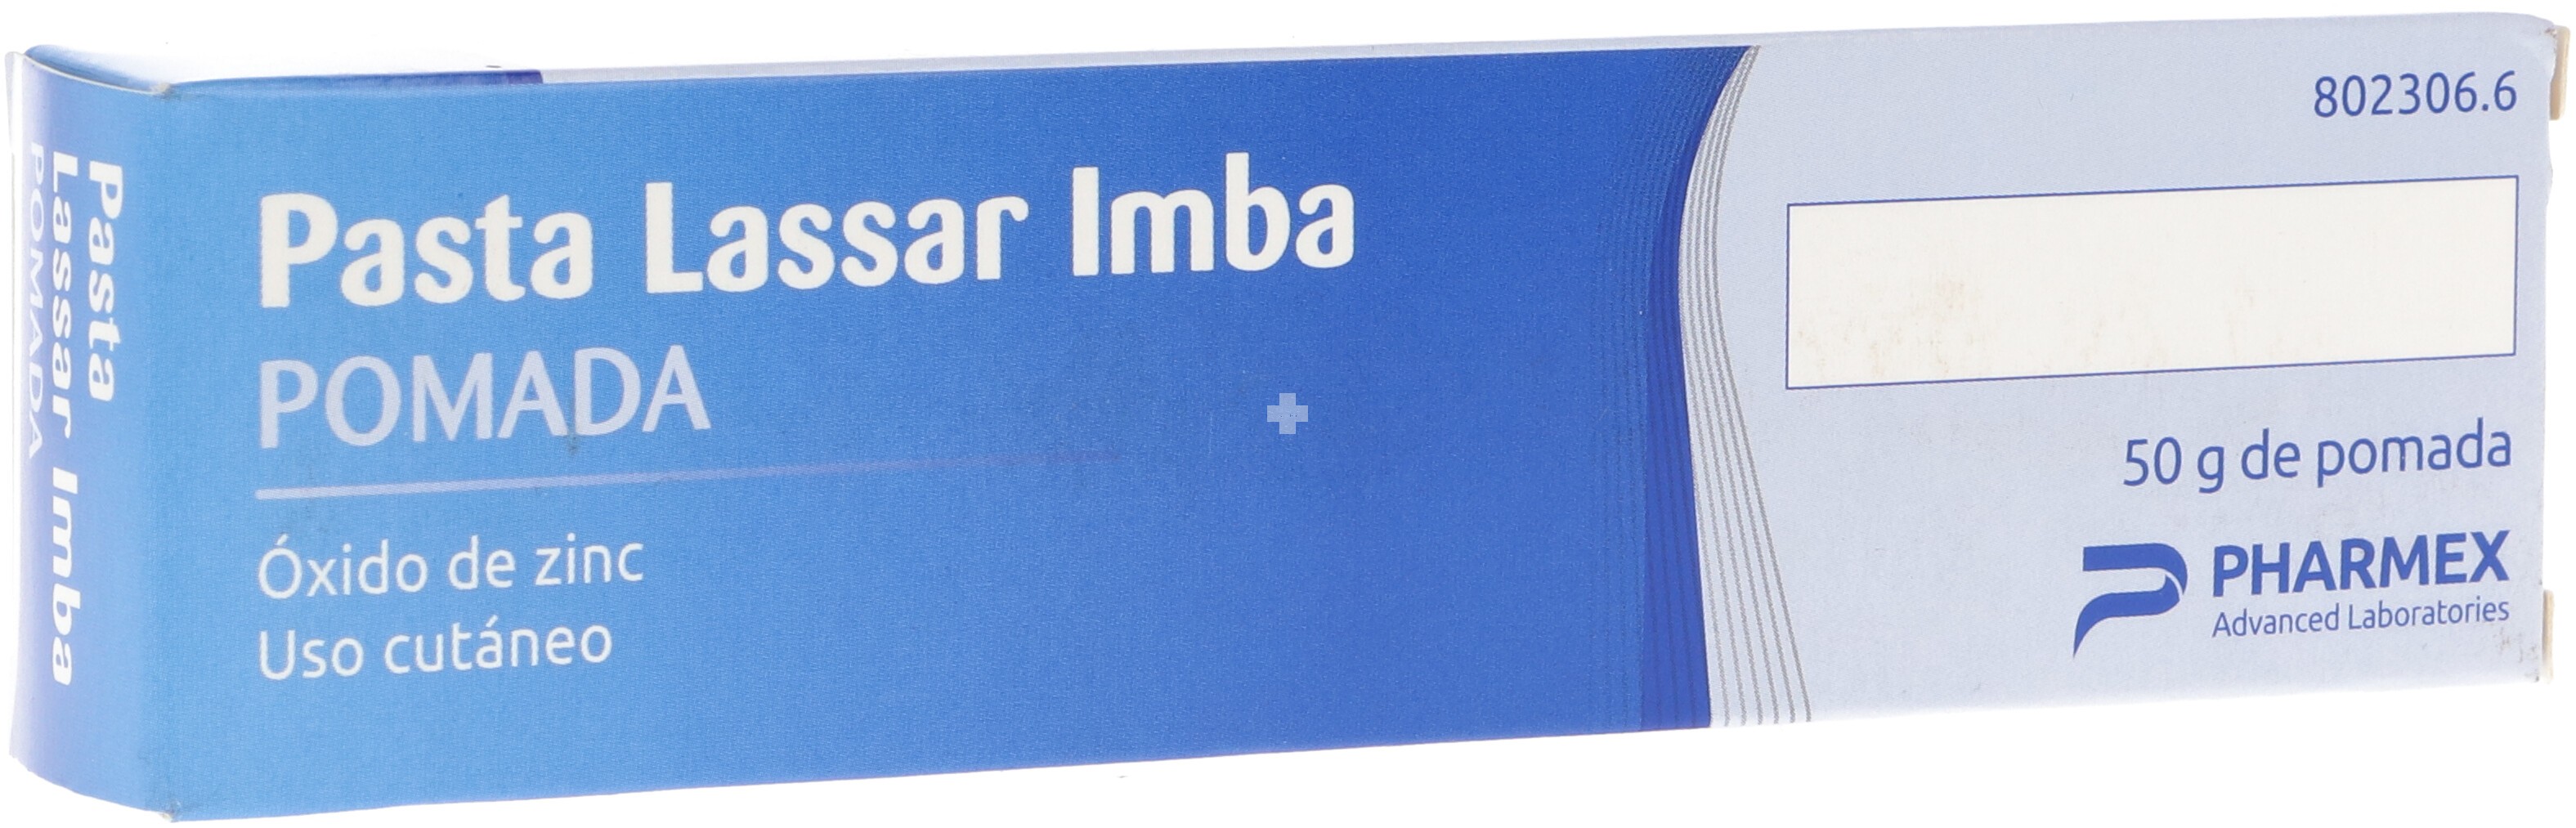 Pasta Lassar Imba Pomada - 1 Tubo De 50 g